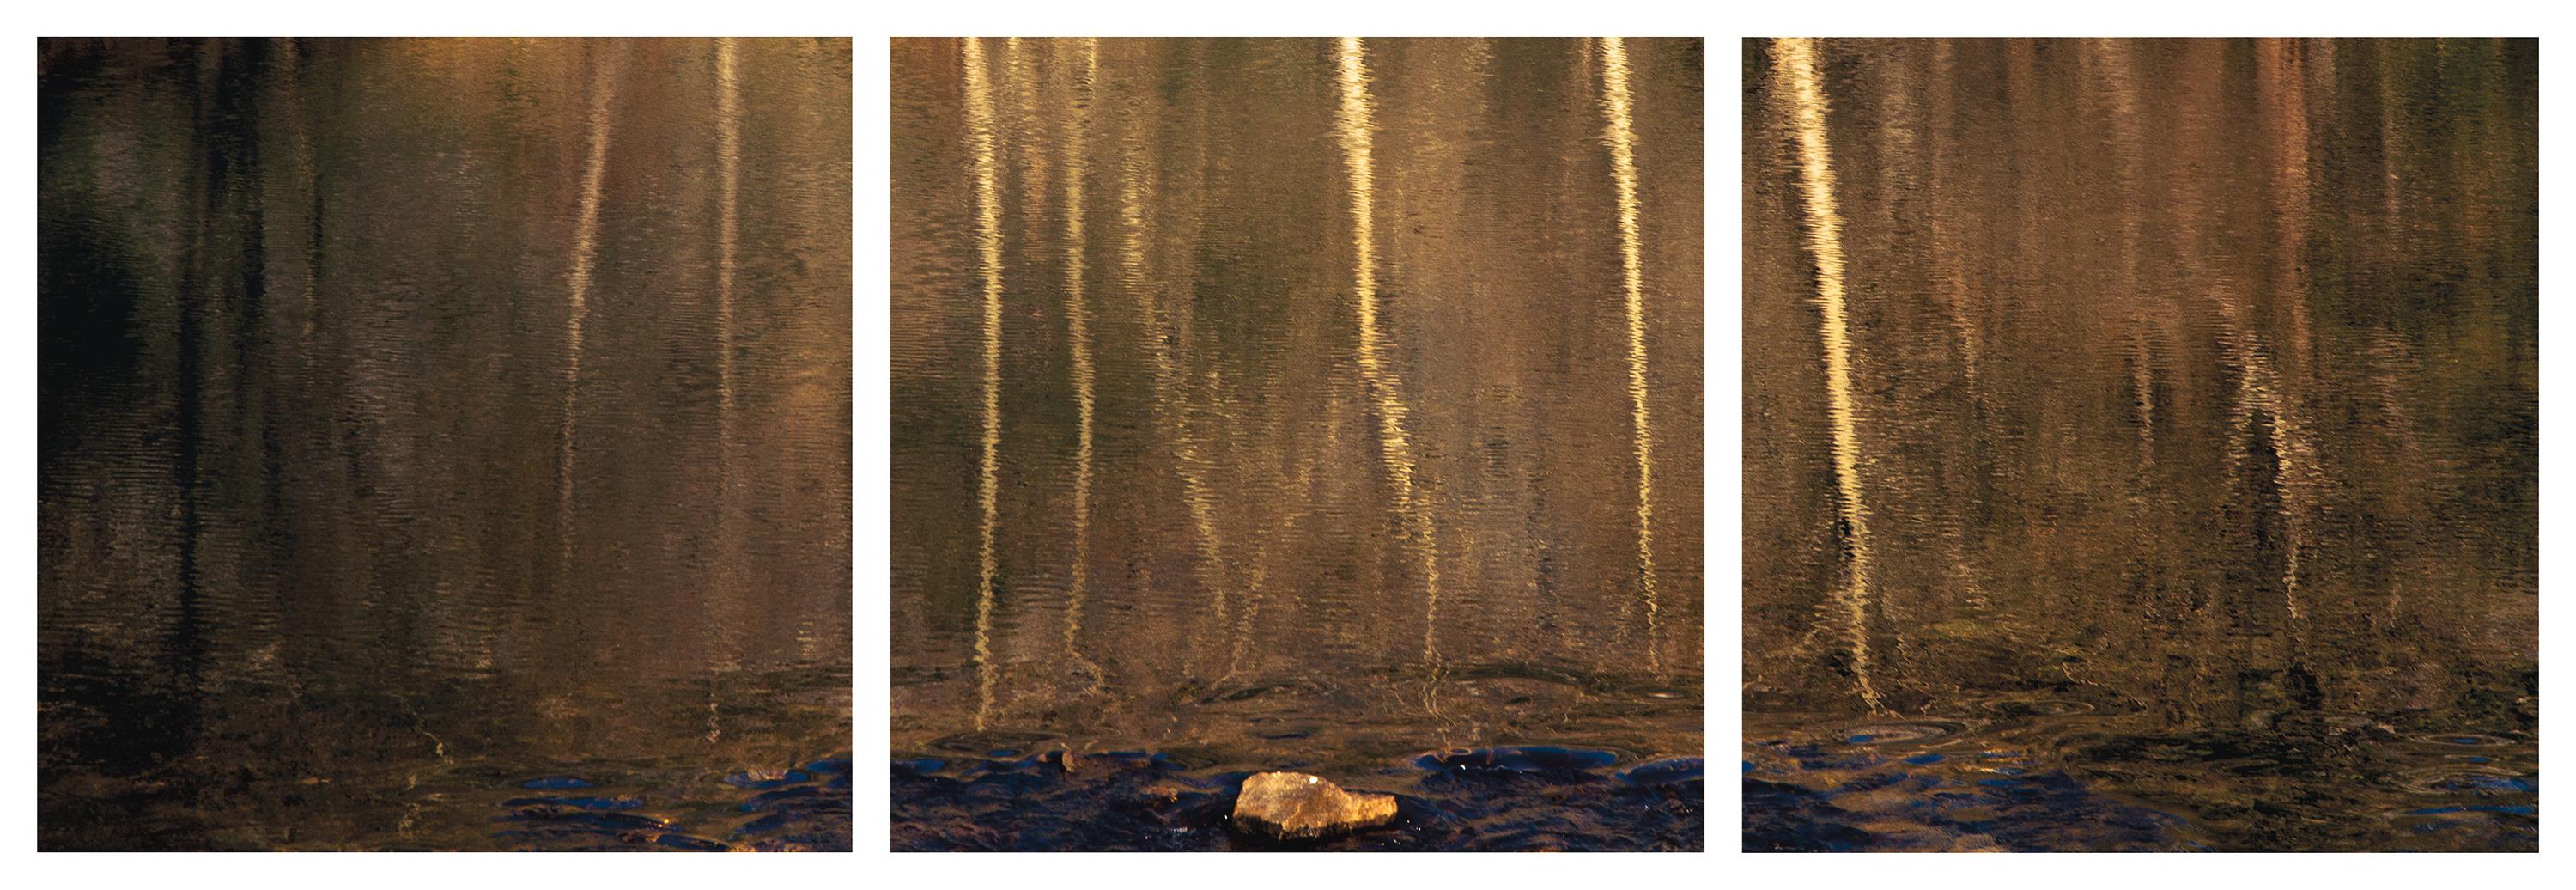 Sophia Milligan Landscape Photograph - 'Wa-Kal-La' Photographic triptych Yosemite Water Wood Tree Stone Nature Gold 